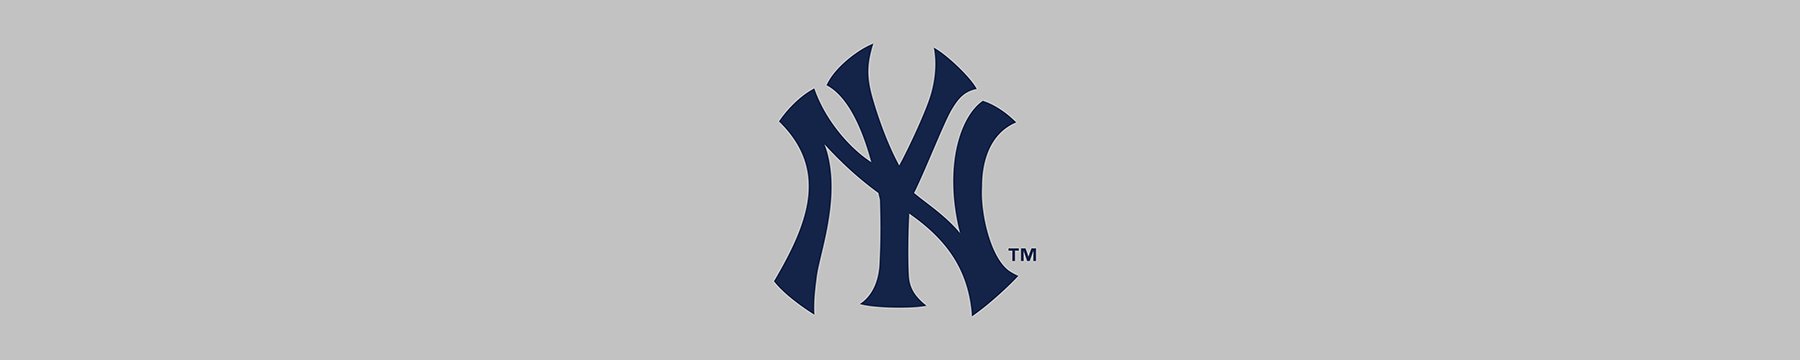 ISlides Official - New York Yankees: Pinstripe Pride 6 / Navy Slides - Sandals - Slippers